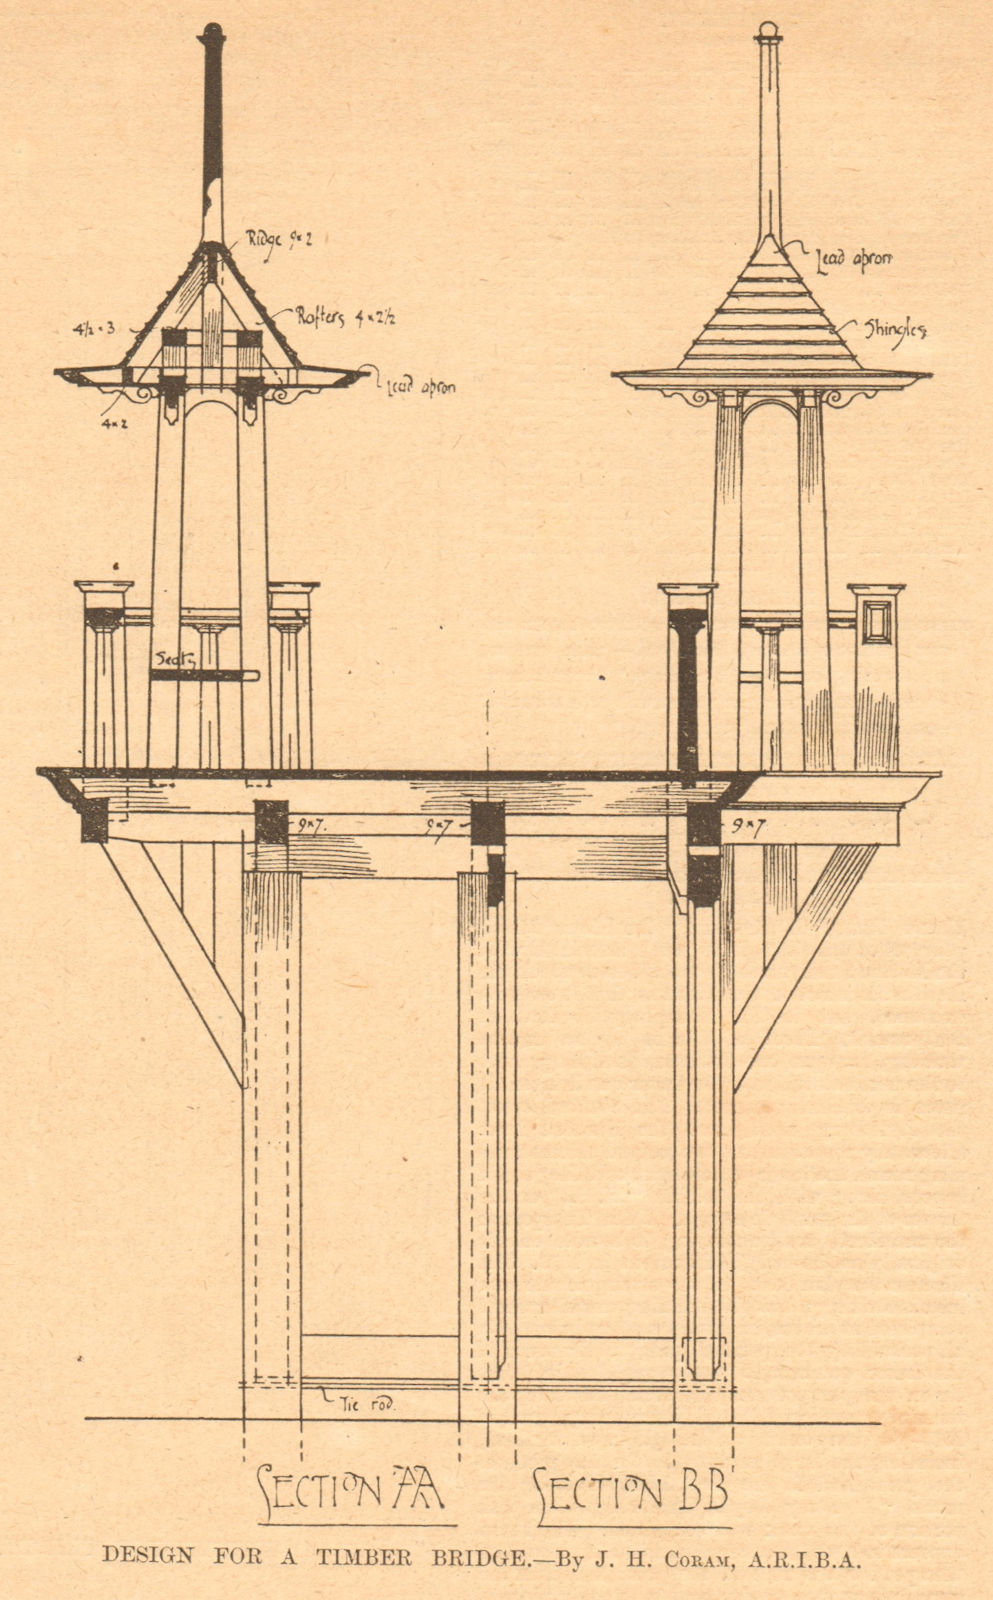 Associate Product Design for a timber bridge by J.H. Coram, A.R.I.B.A.. Bridges 1901 old print